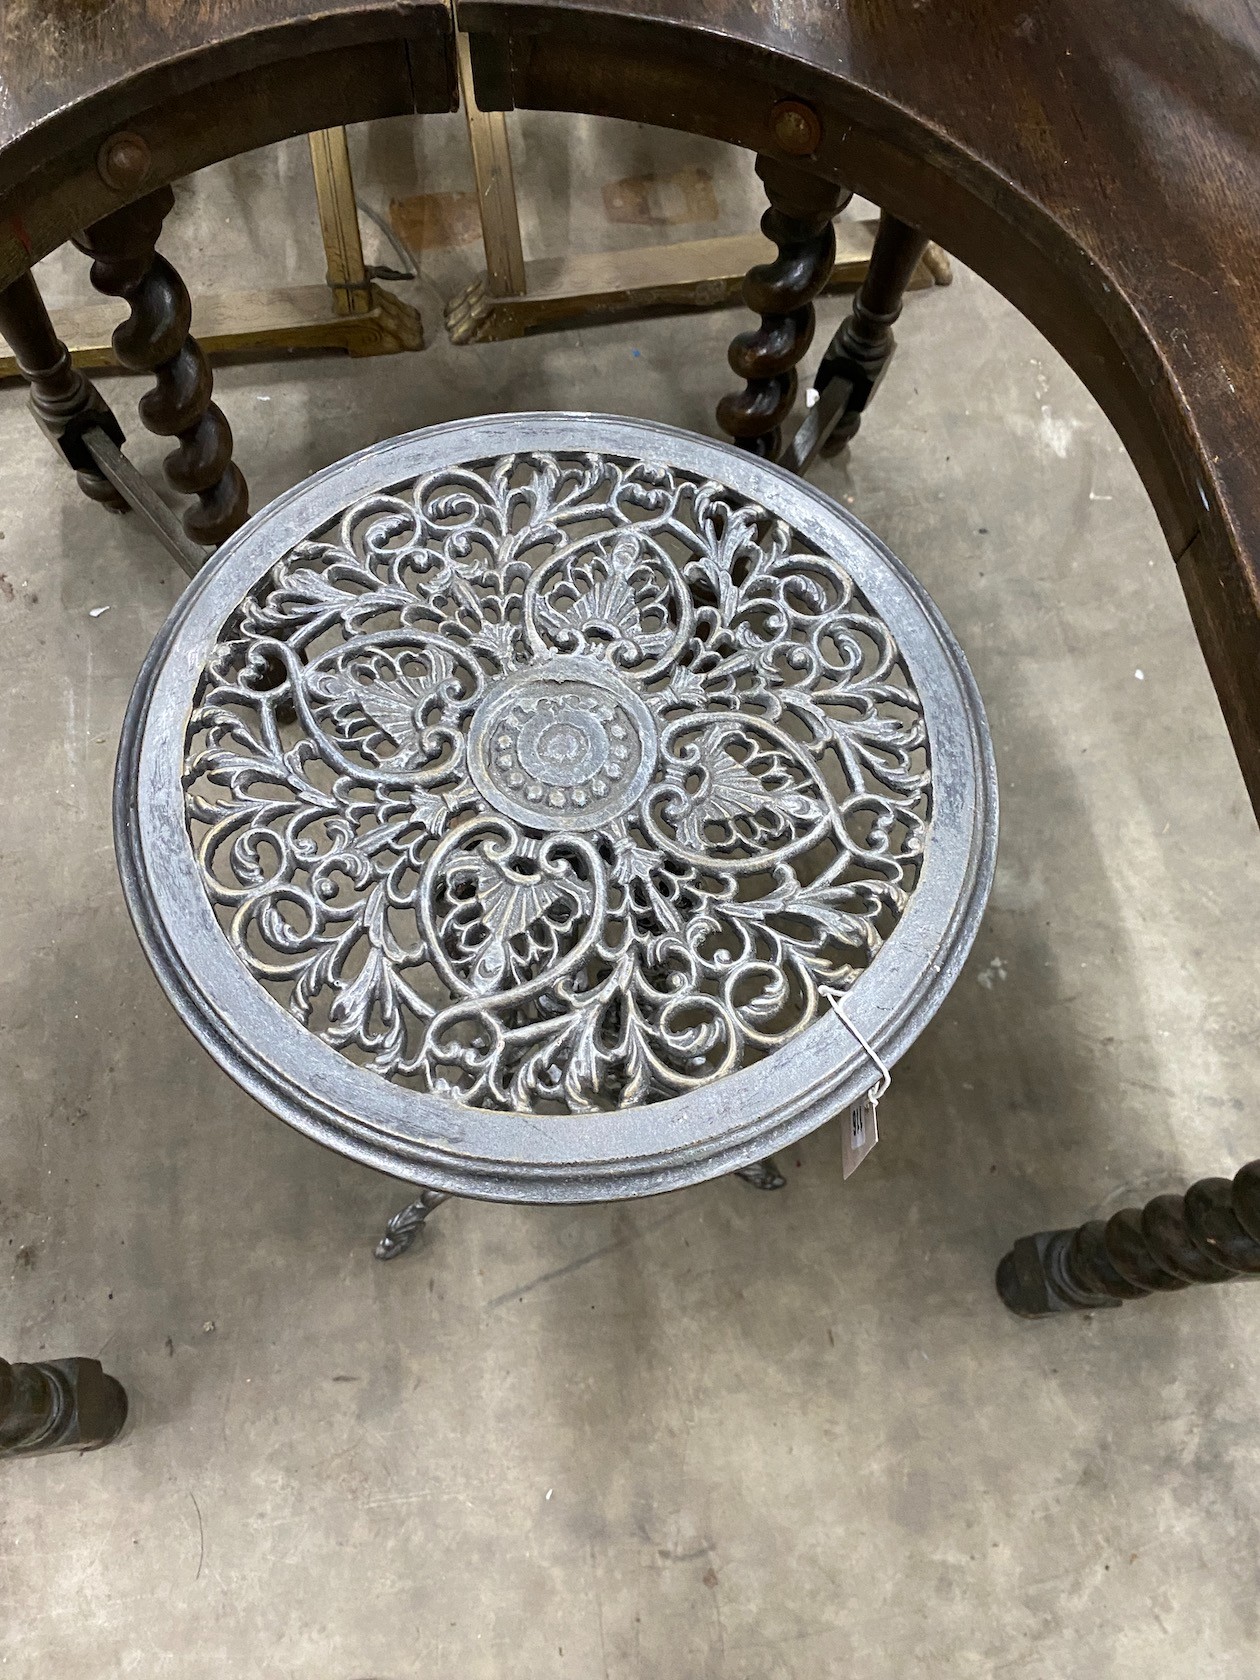 A Victorian style cast iron circular table, diameter 36cm, height 72cm